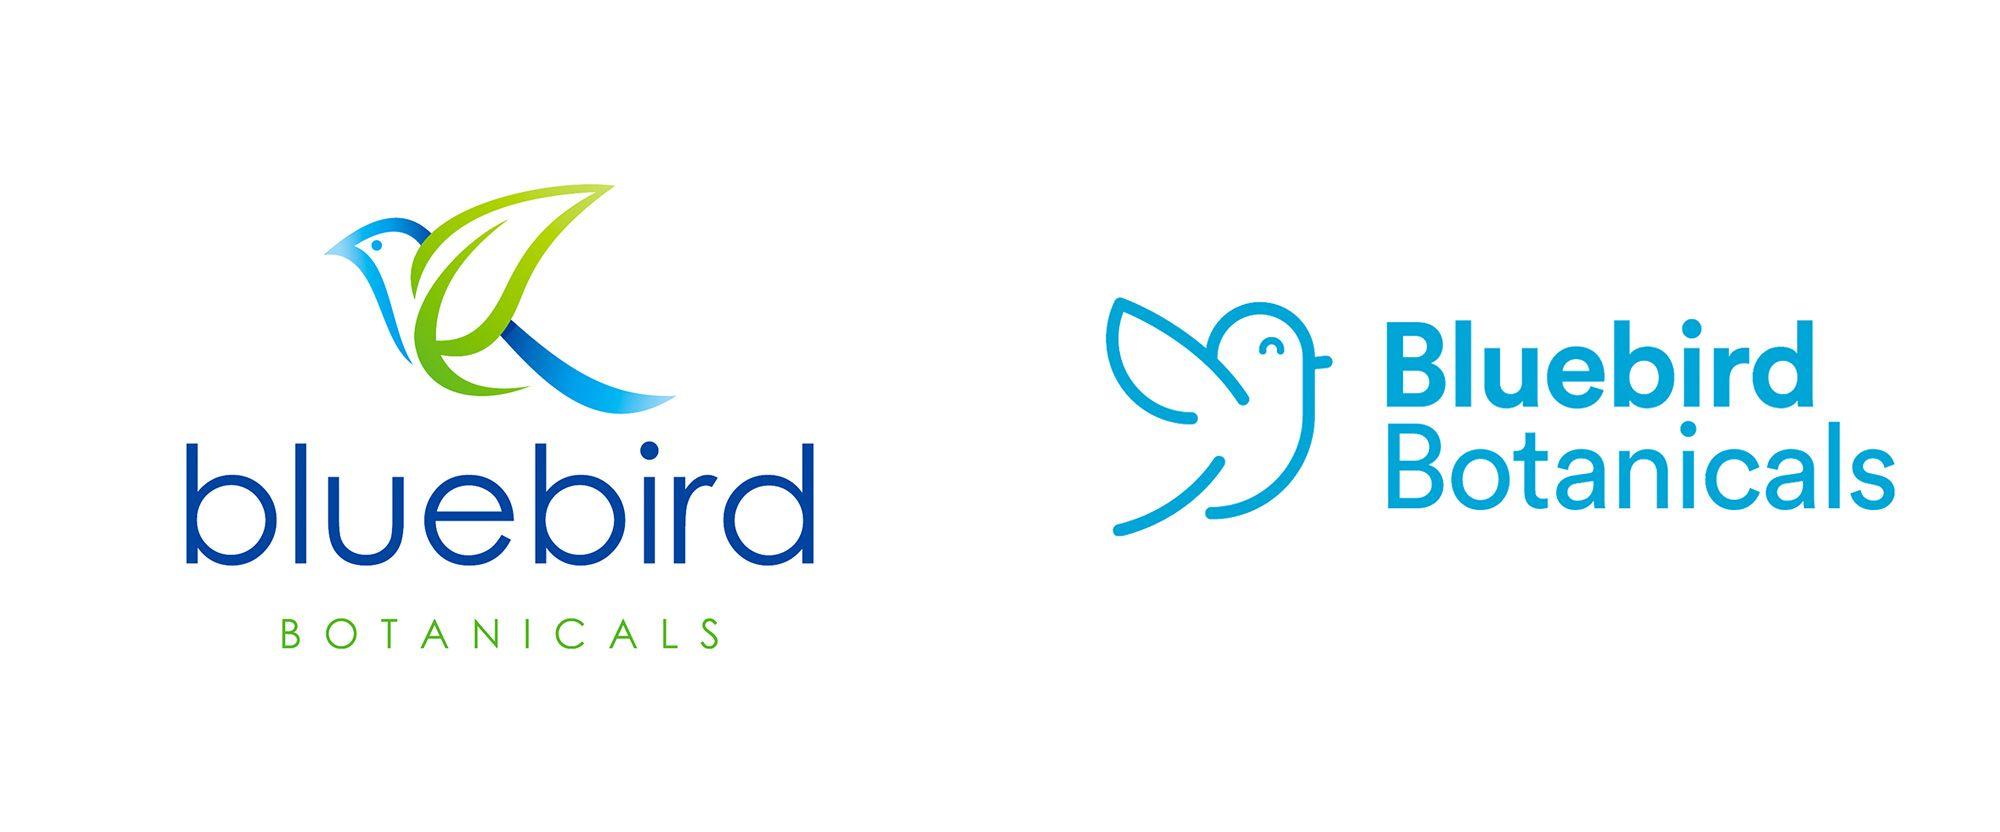 Blue Bird Brand Logo - Brand New: New Logo and Packaging for Bluebird Botanicals by Illustria